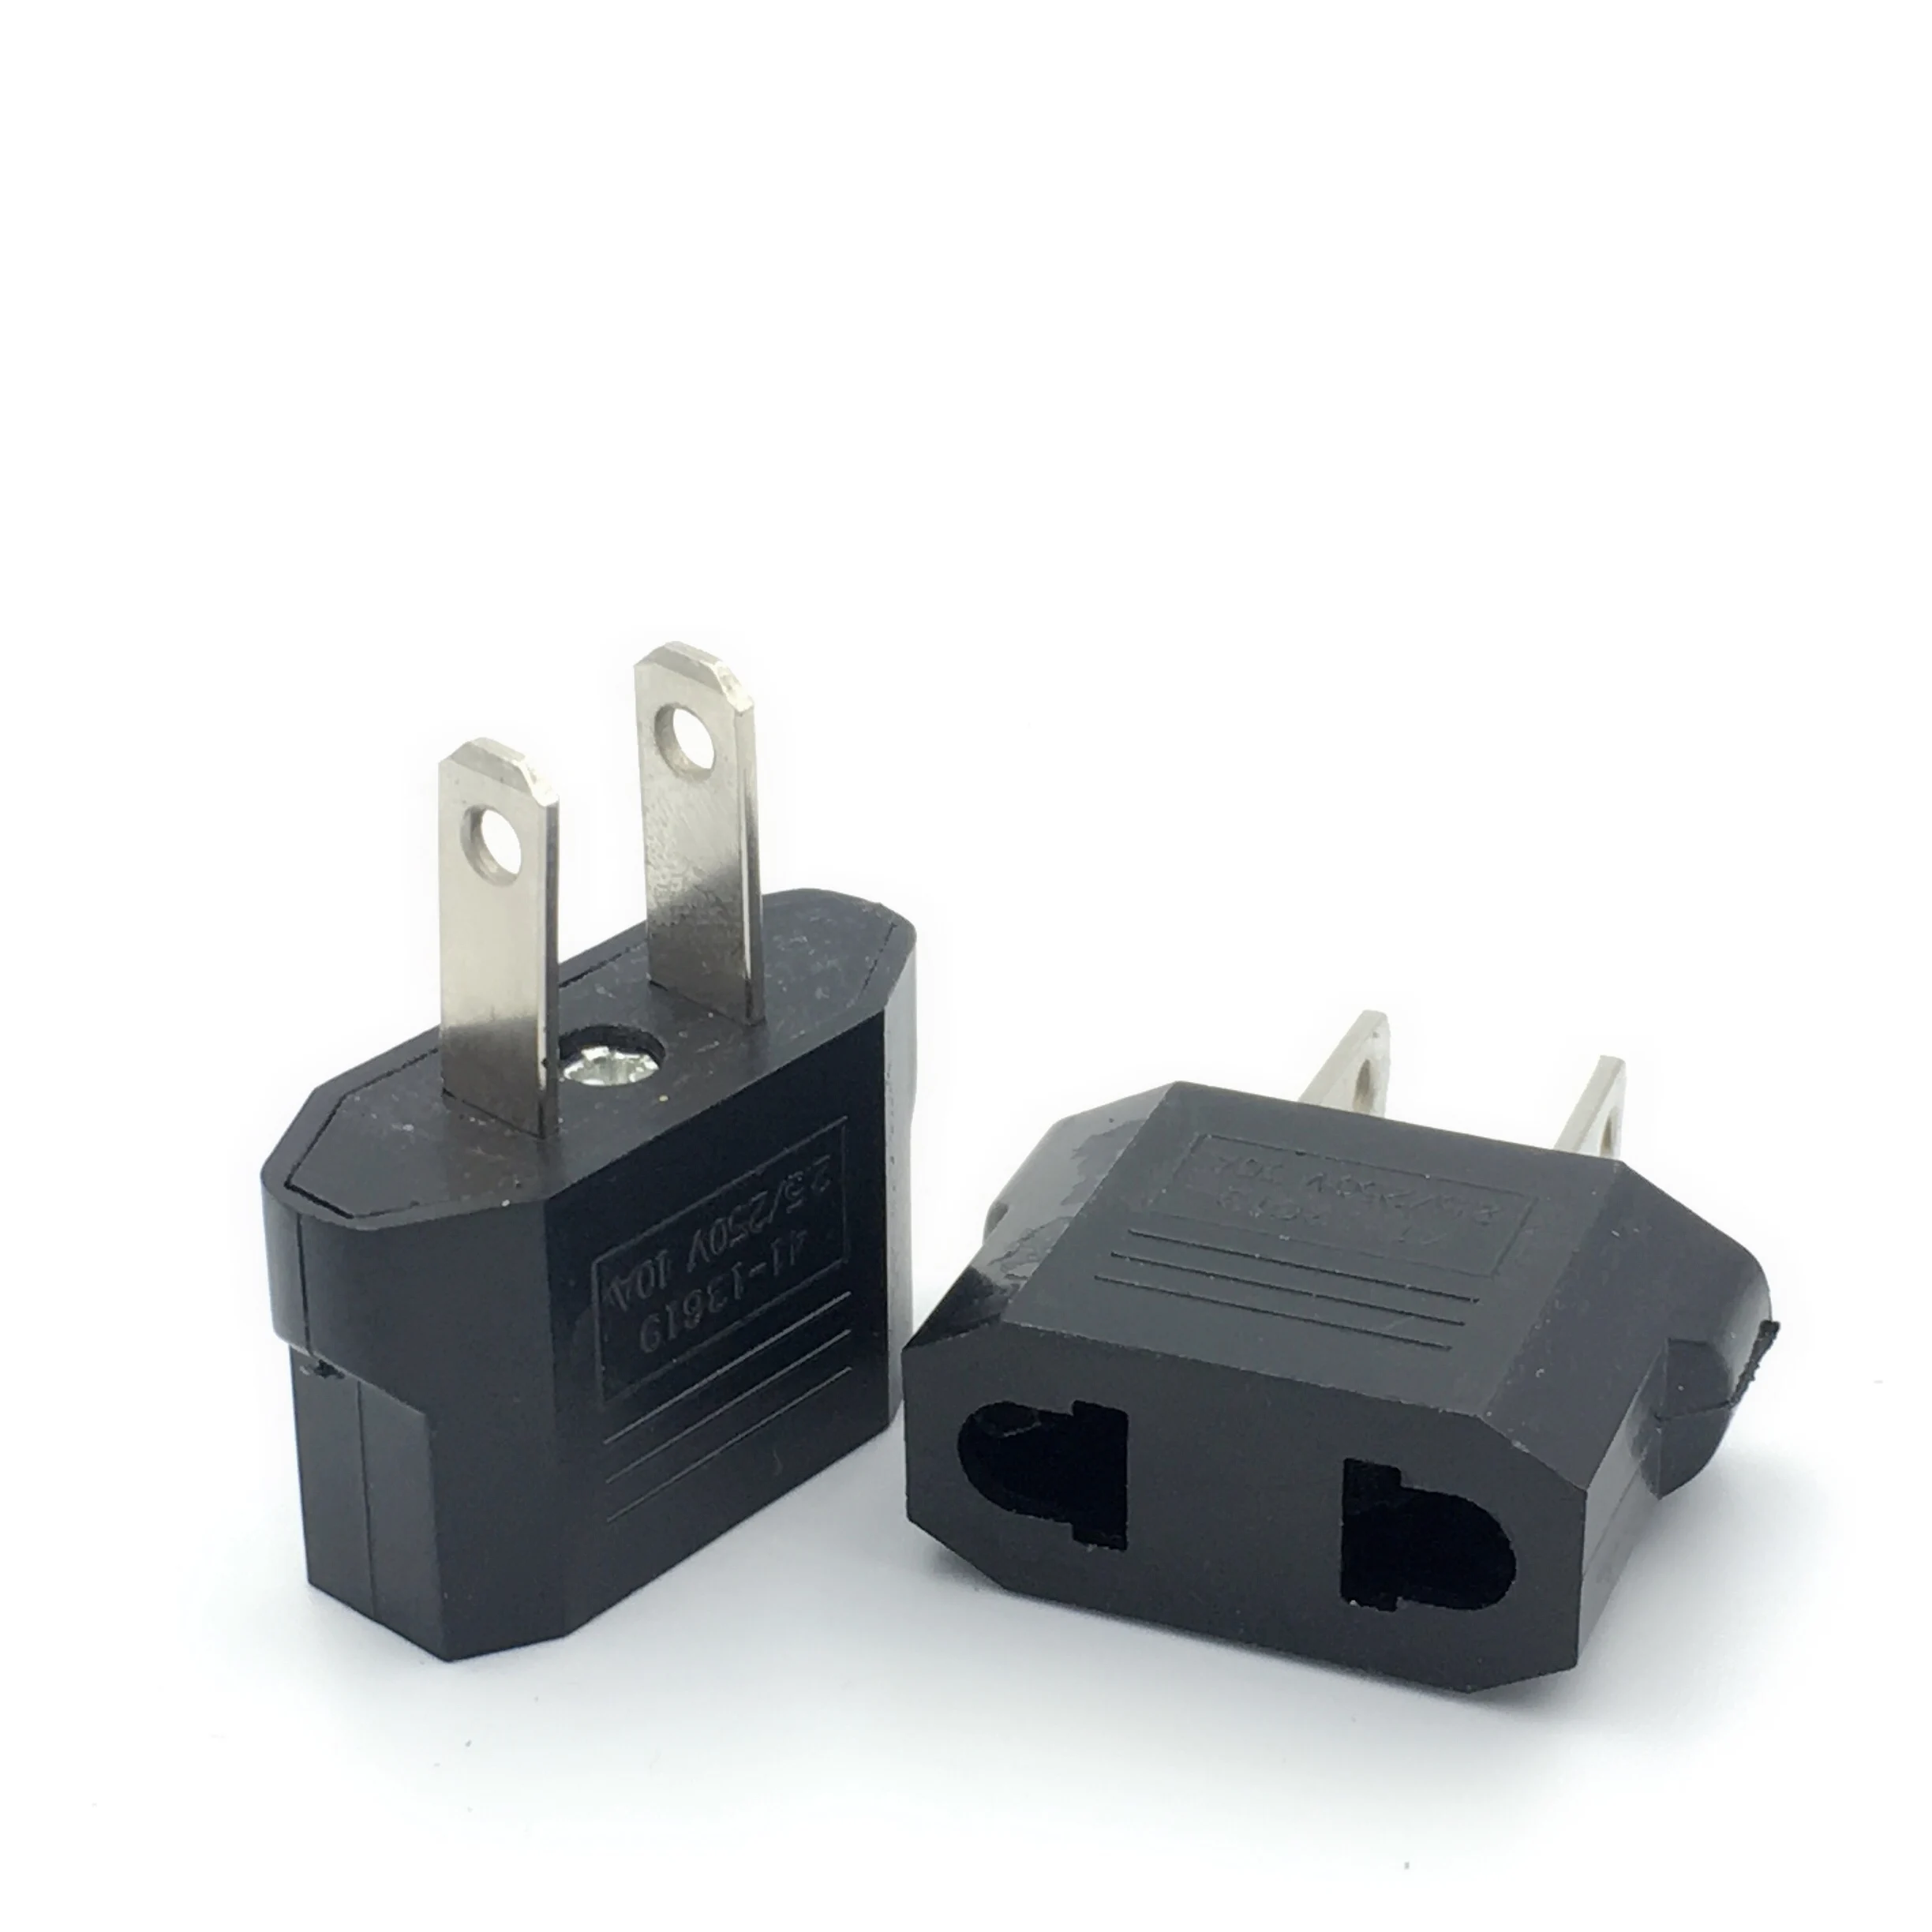 

100 Pcs/lot High quality European Euro Eu AU to US/USA Plug Power Socket Travel Charger Adapter Plug Outlet Converter Adapter